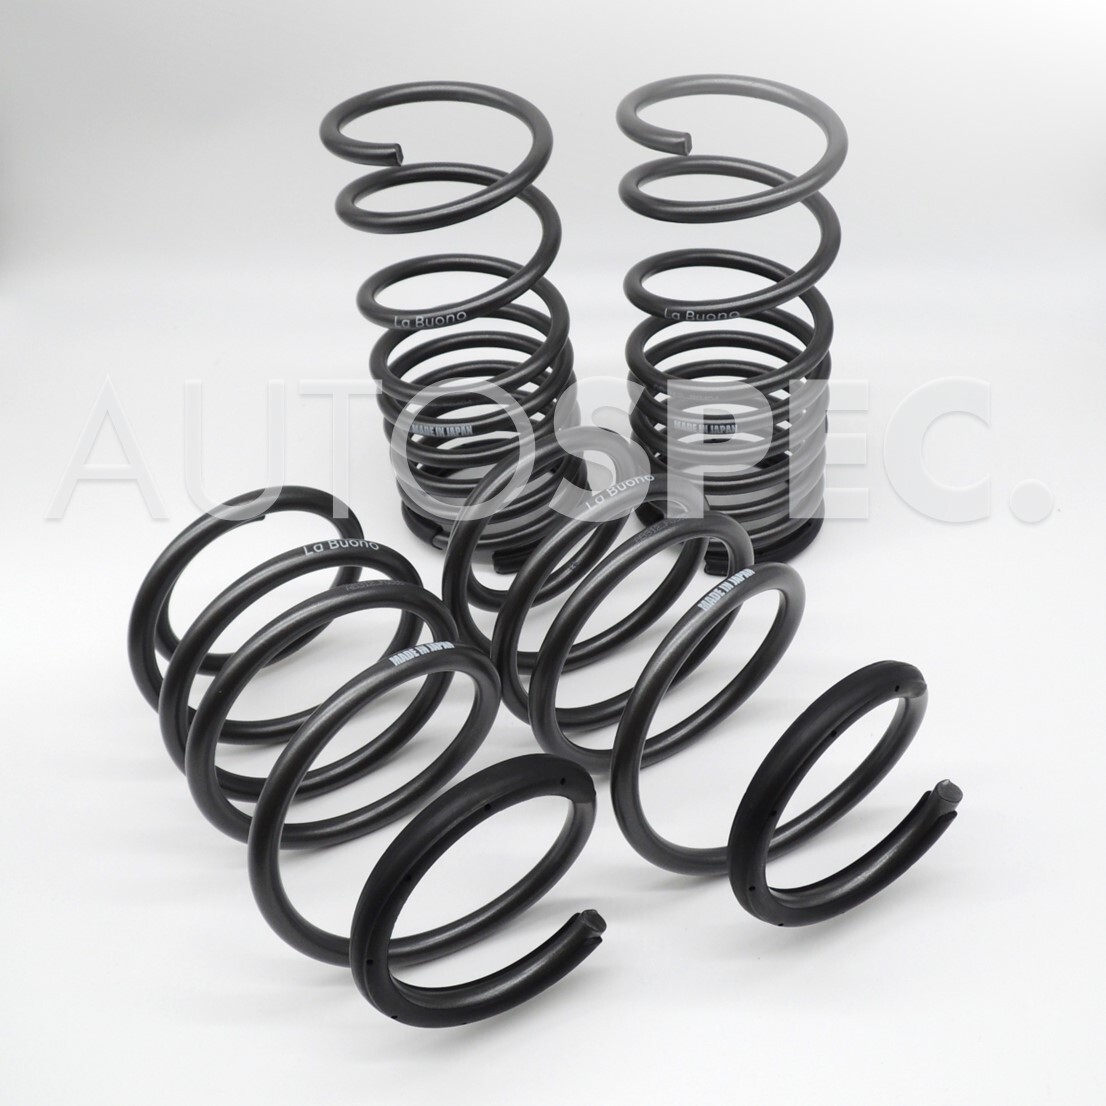 ABARTH 500 595 695 low form springs kit LaBuono abarth custom parts down suspension lowdown vehicle height lavo-no